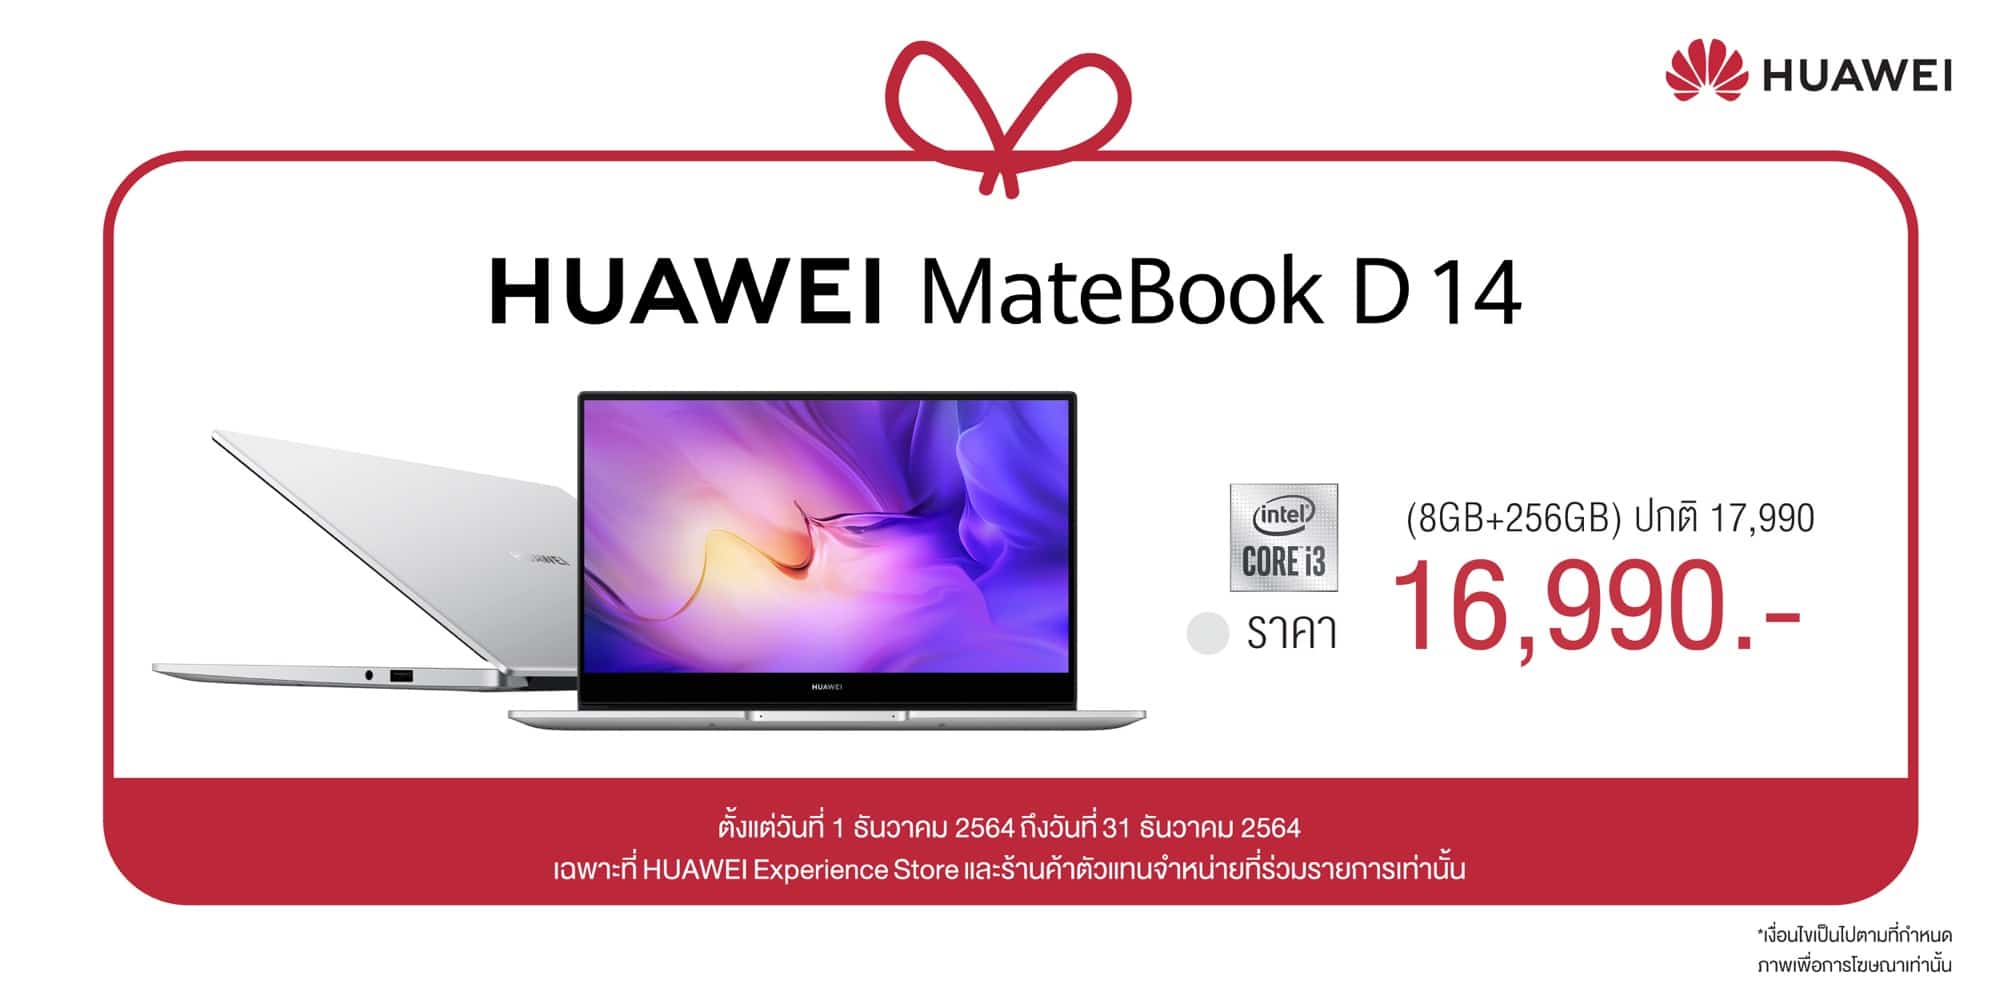 HUAWEI MateBook D Series จัดโปรราคาดี เริ่มต้น 15,990 บาท 5